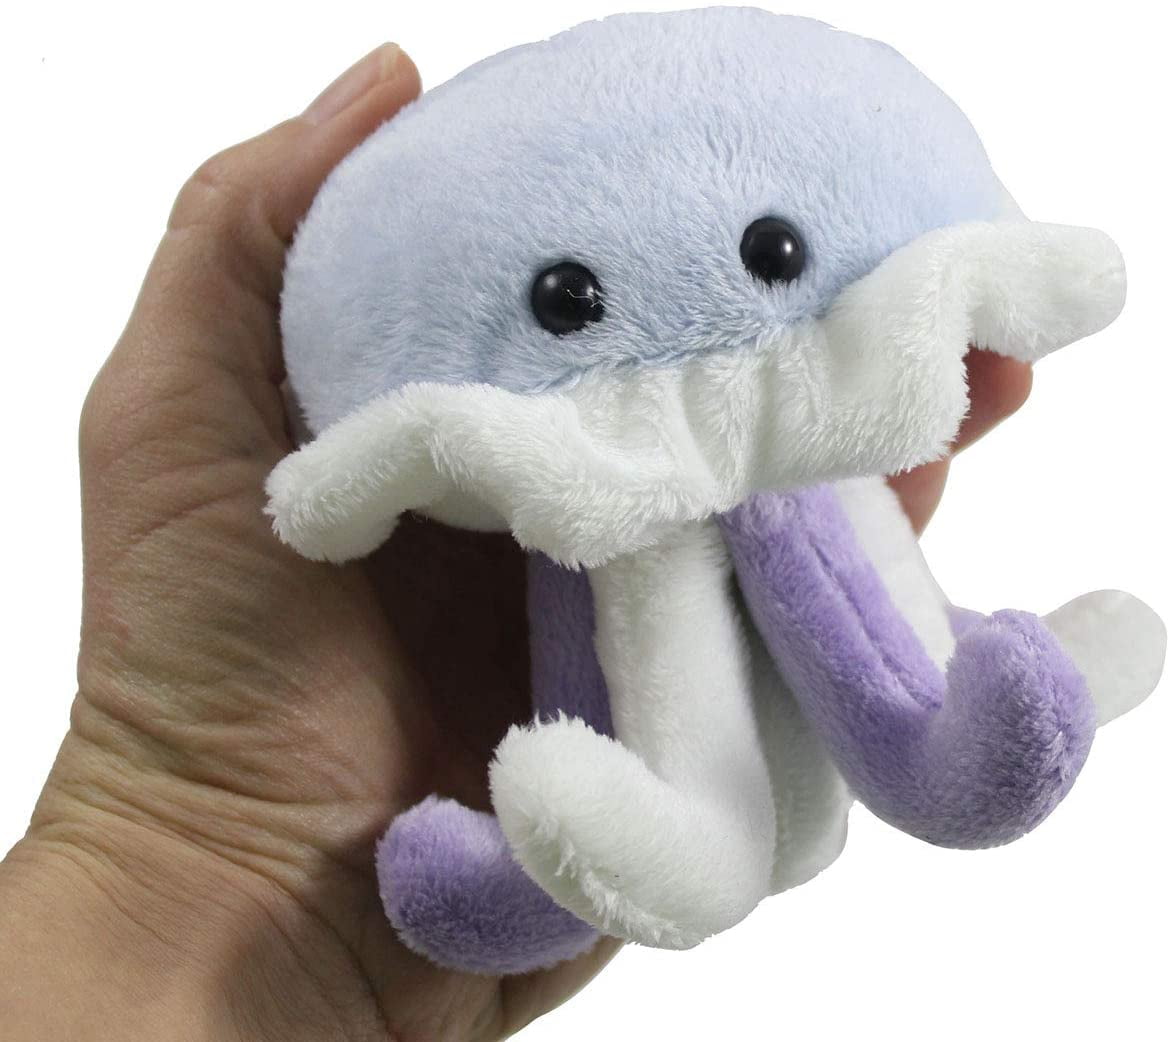 Plush Jellyfish Stuffed Animal Toy Soft Ocean Aquatic